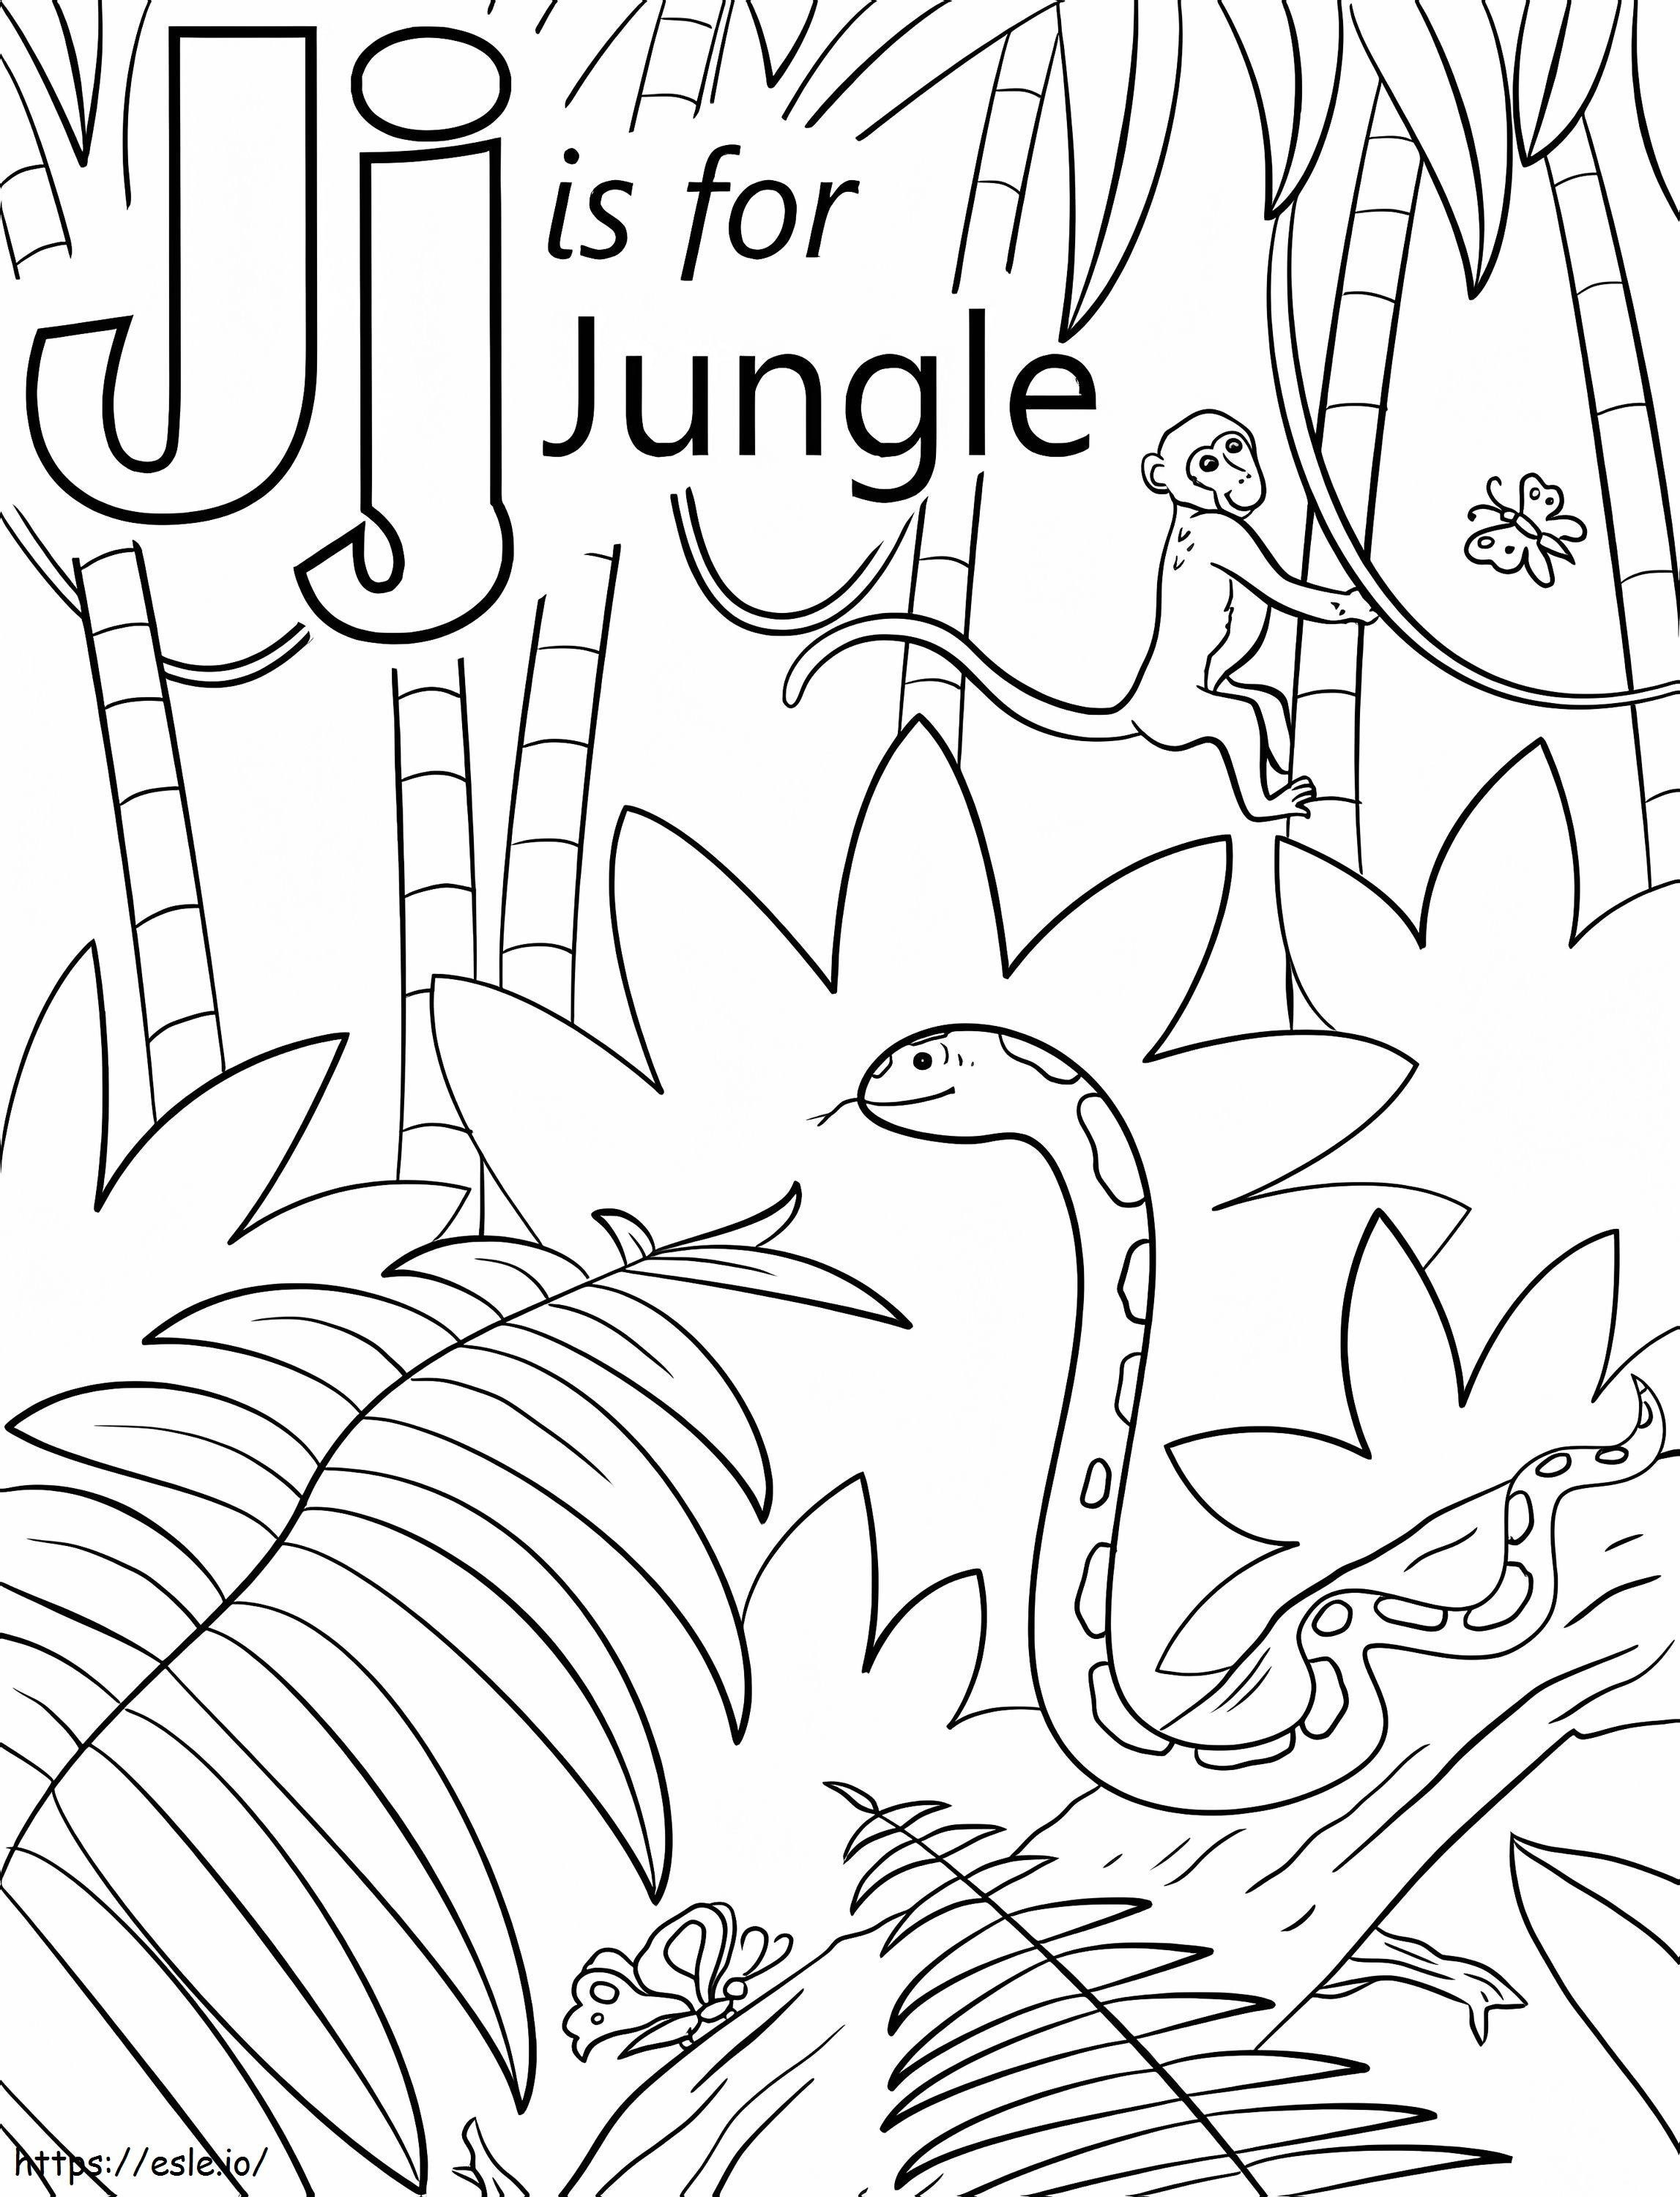 Jungle Letter J kleurplaat kleurplaat